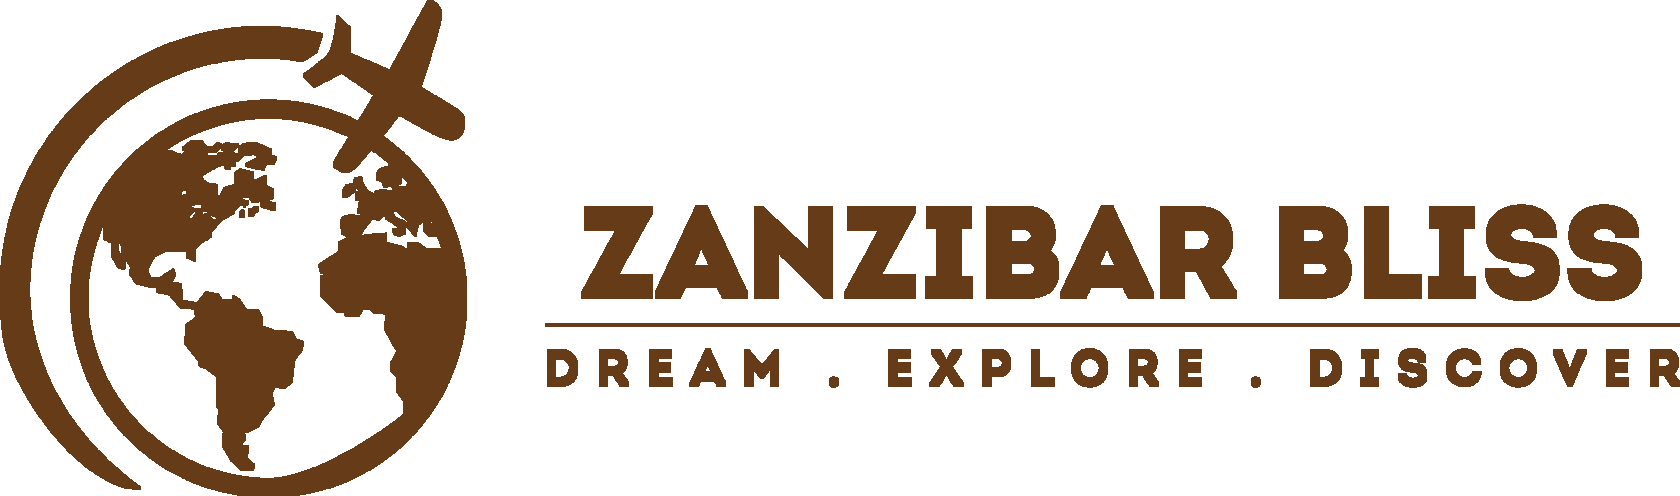 city tour zanzibar